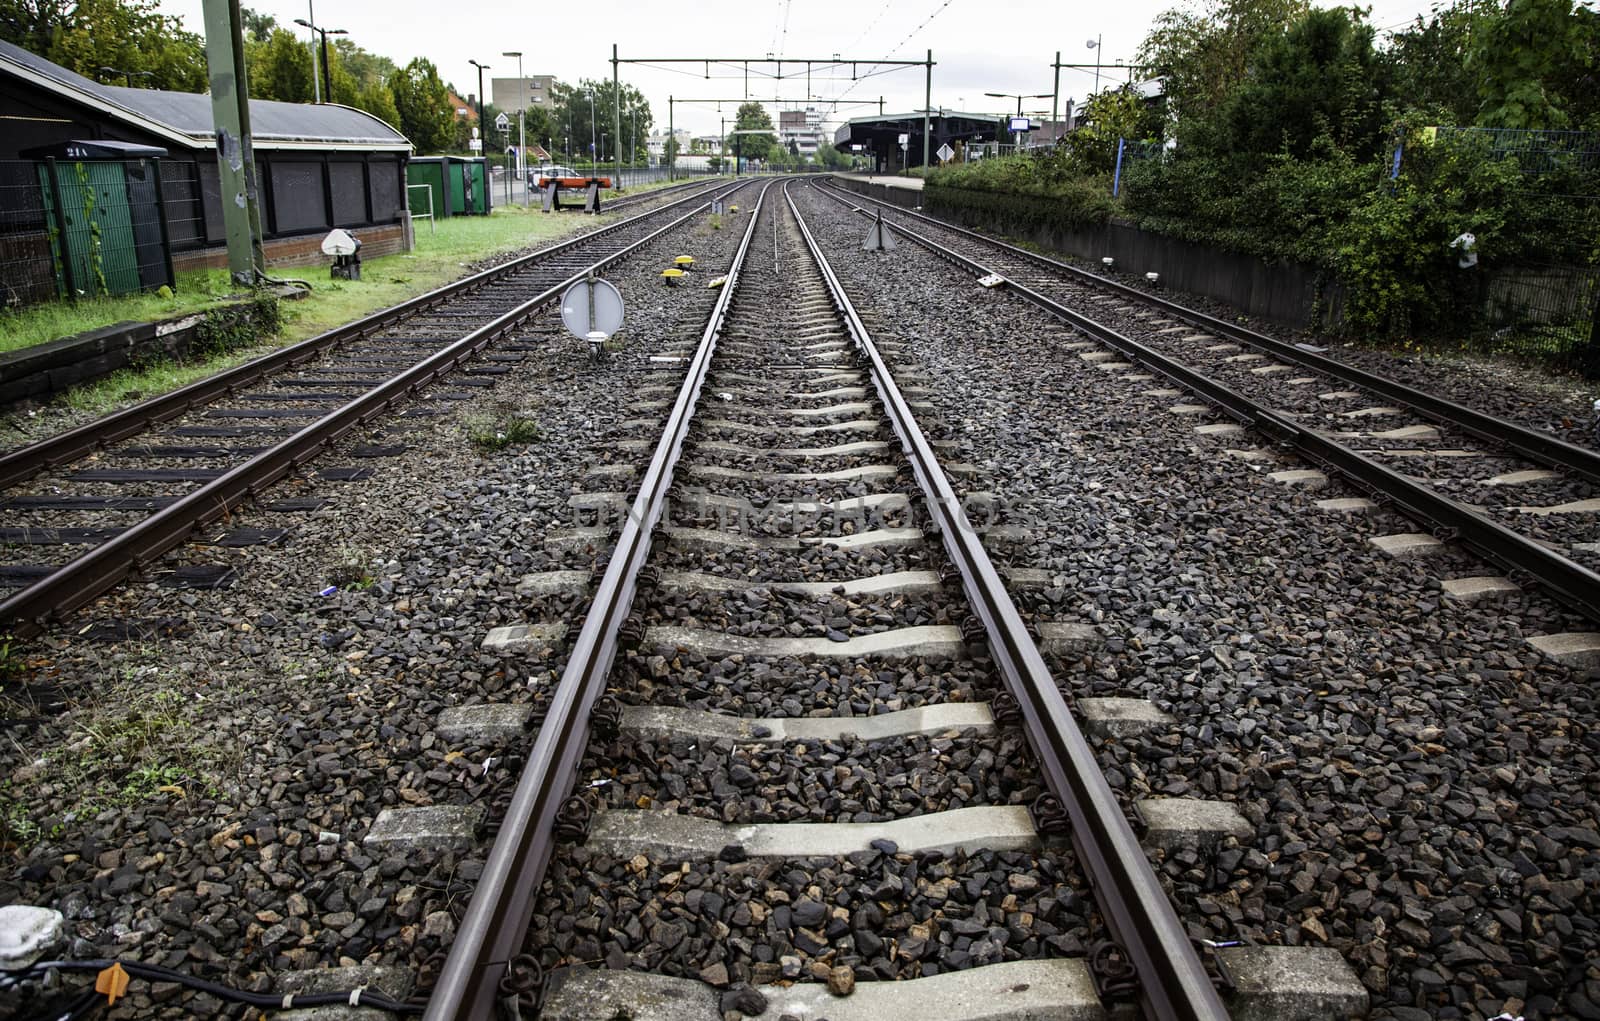 Train tracks in a station by esebene